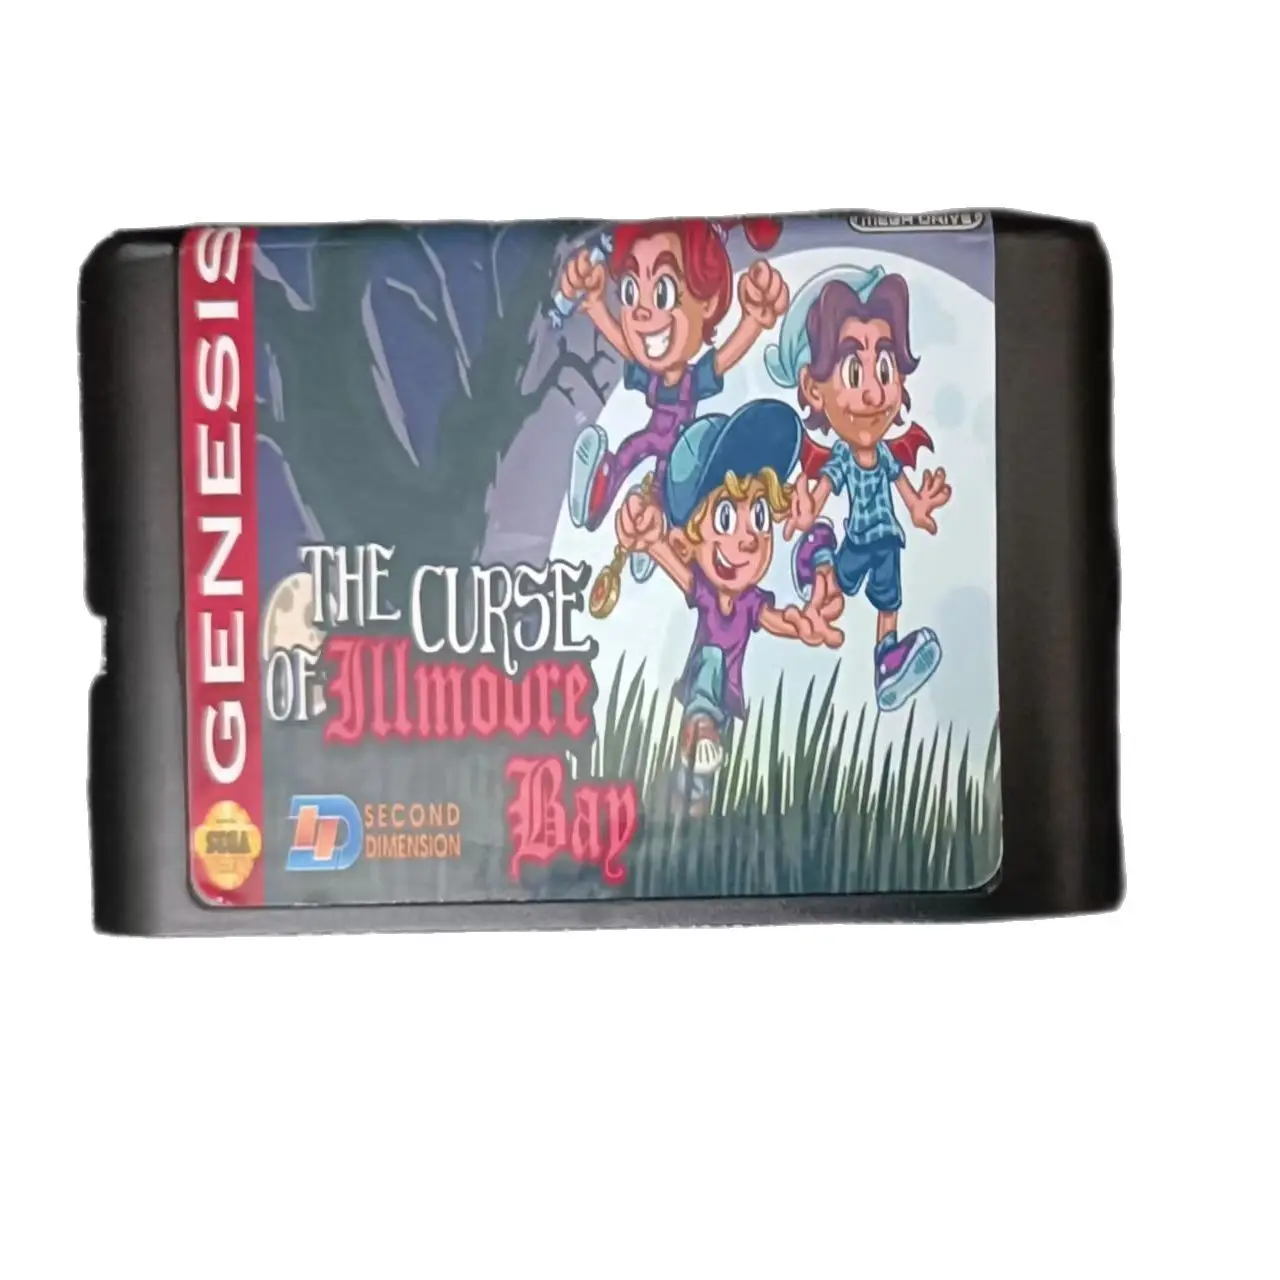 MD The Curse of Illmoore Bay Retro Mega Drive Game Card 16BIT 2021 Sega Genesis Game card